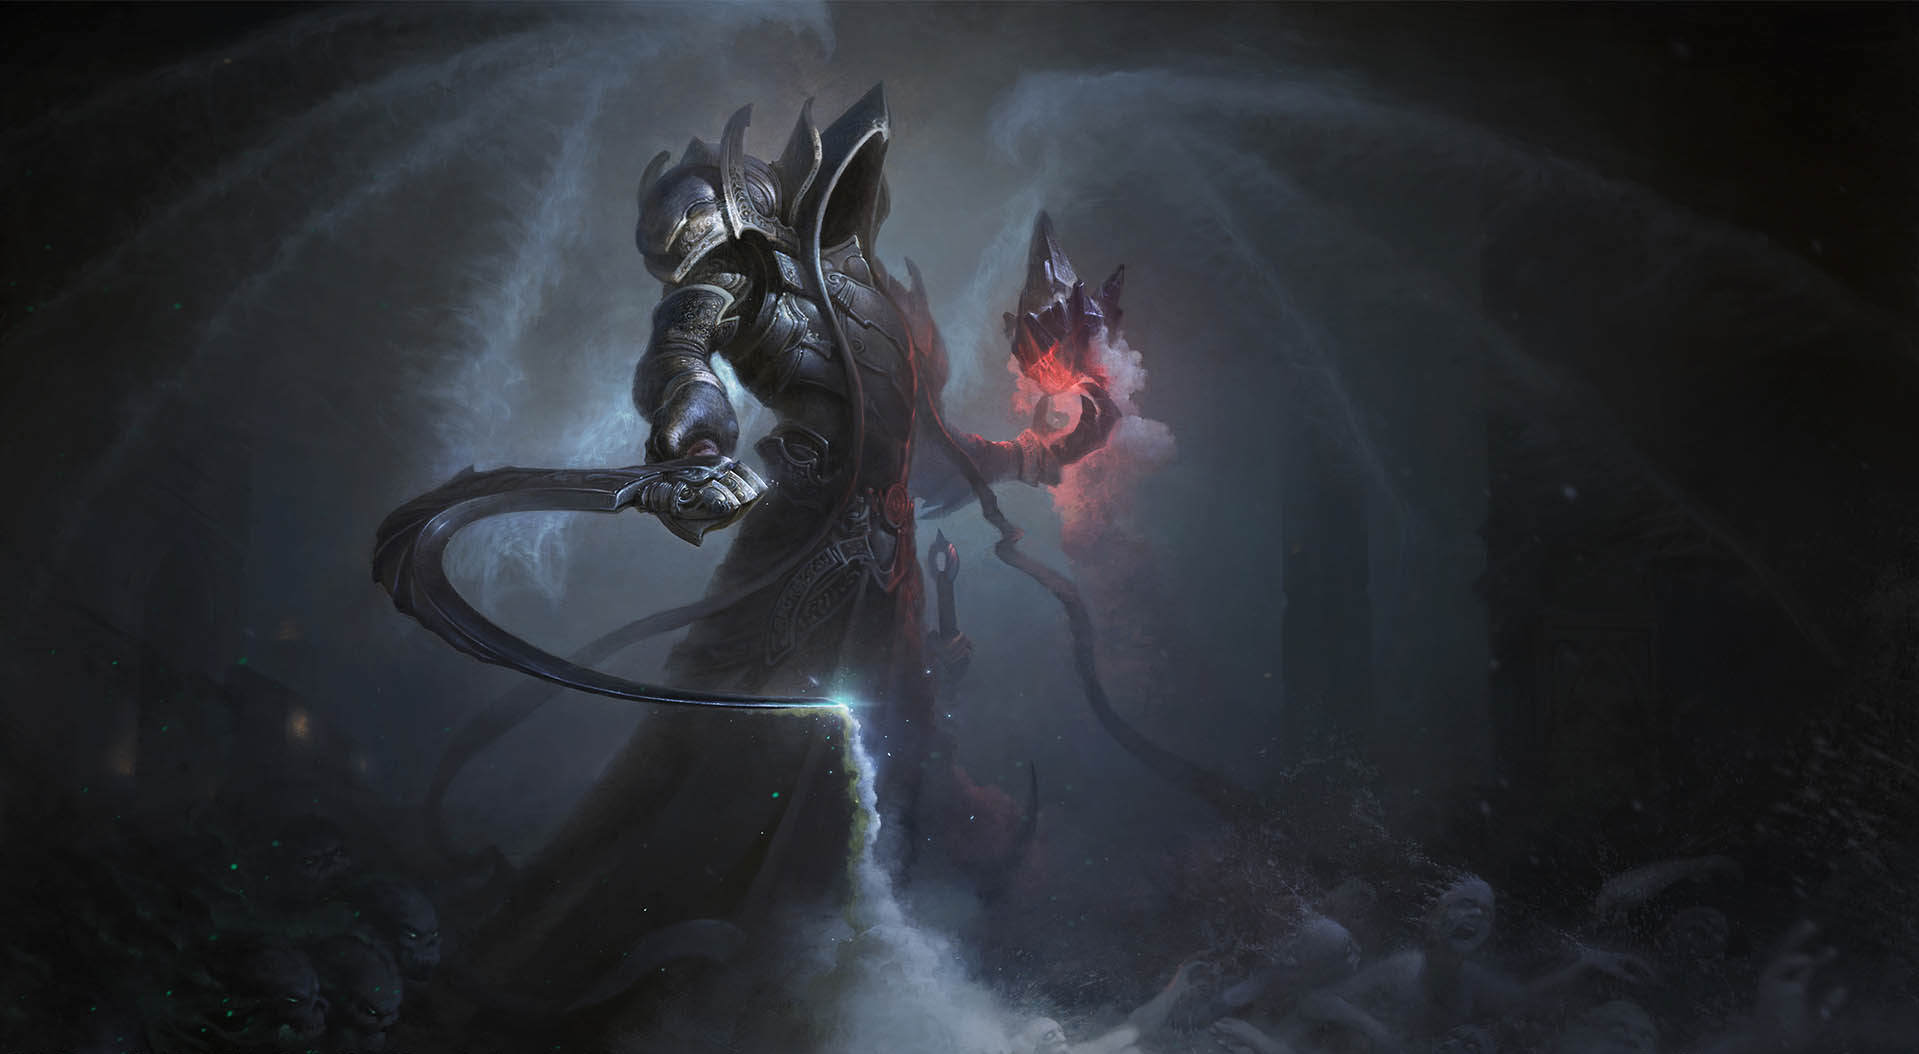 Diablo Iii Diablo 3 Reaper Of Souls Artwork Video Games Fantasy Art Video Game Art 2012 Year 1919x1054